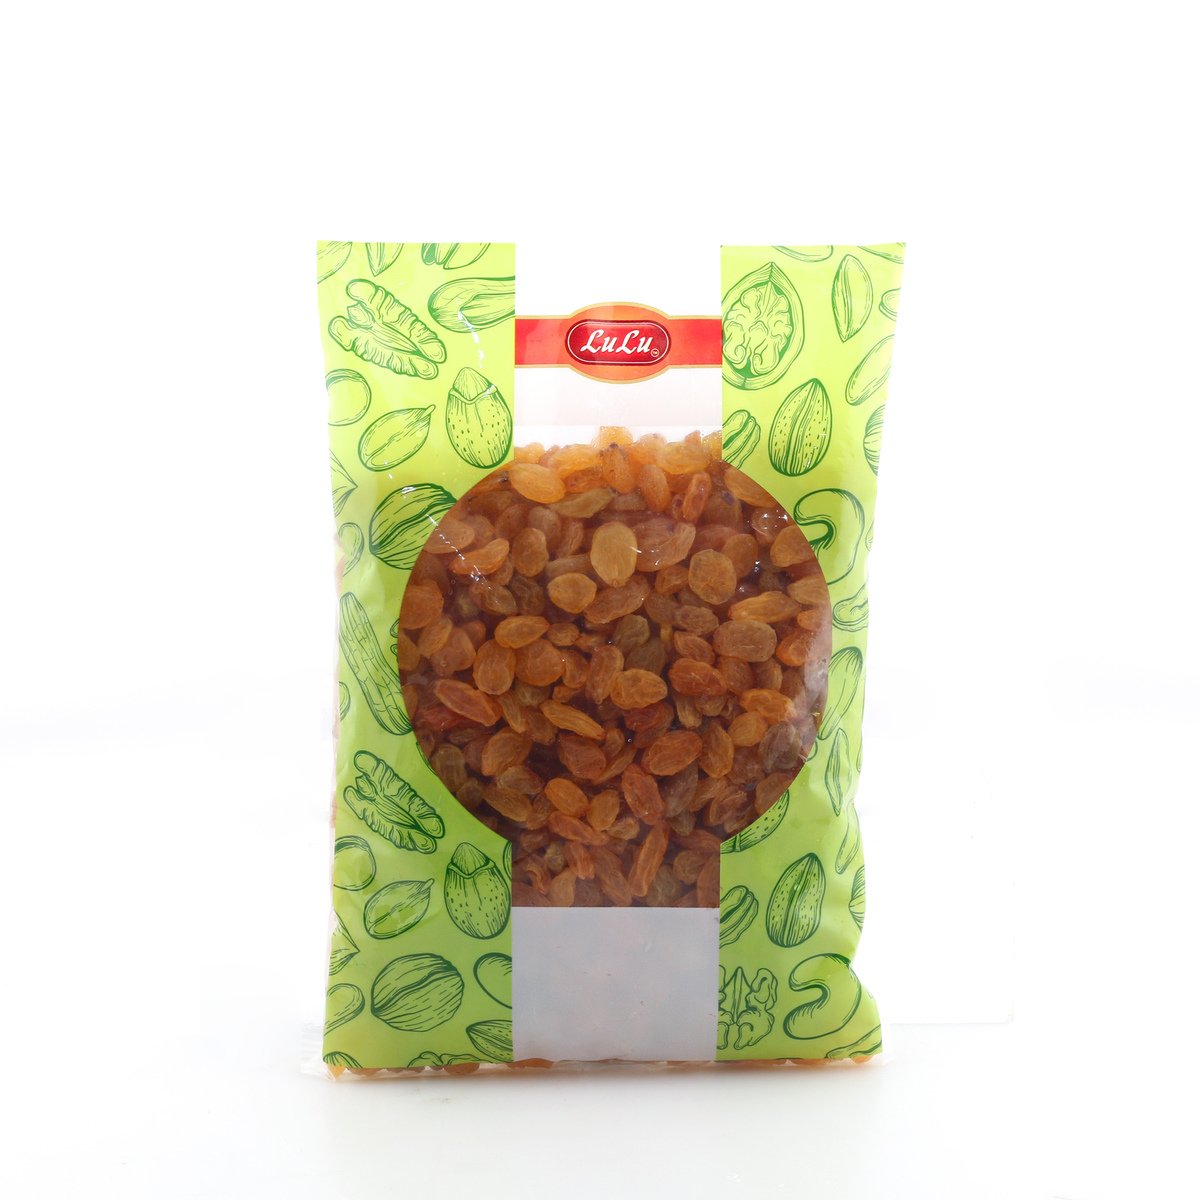 Lulu Golden Raisins 500g Online At Best Price Roastery Dried Fruit Lulu Kuwait Price In 